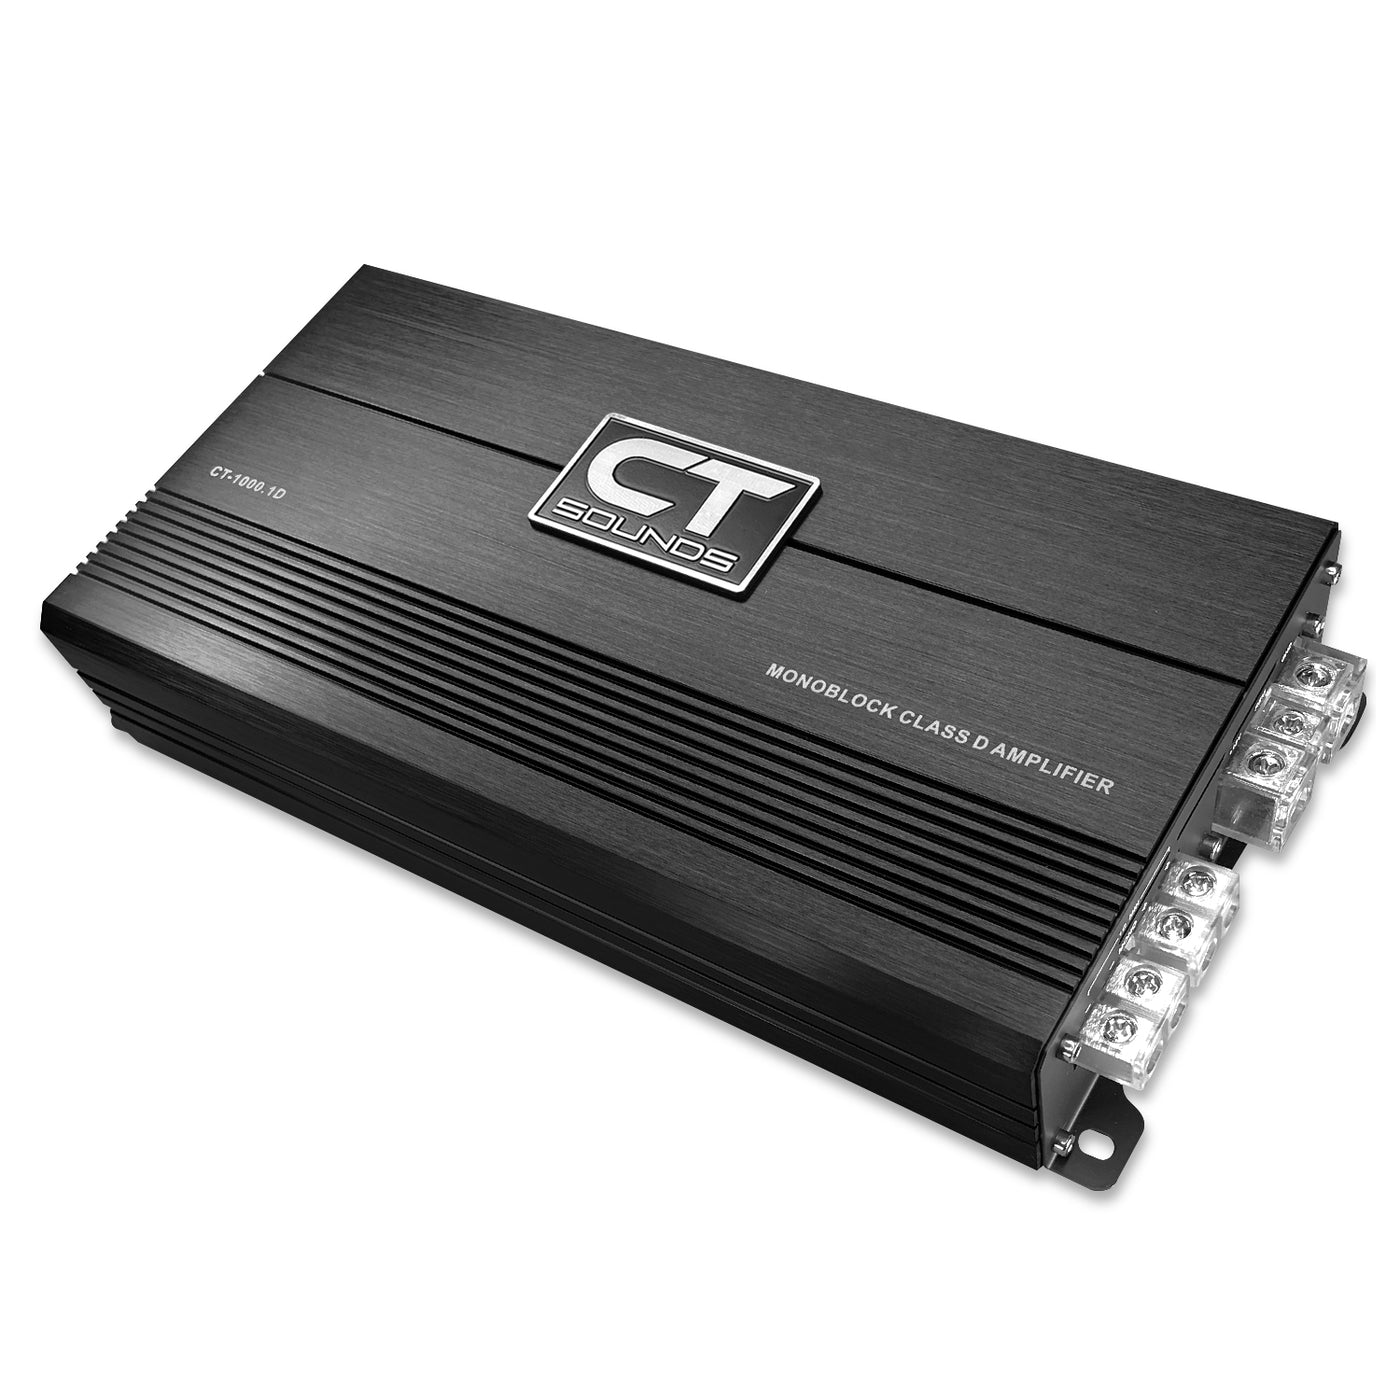 CT-1000.1D // 1000 Watts RMS Monoblock Car Audio Amplifier